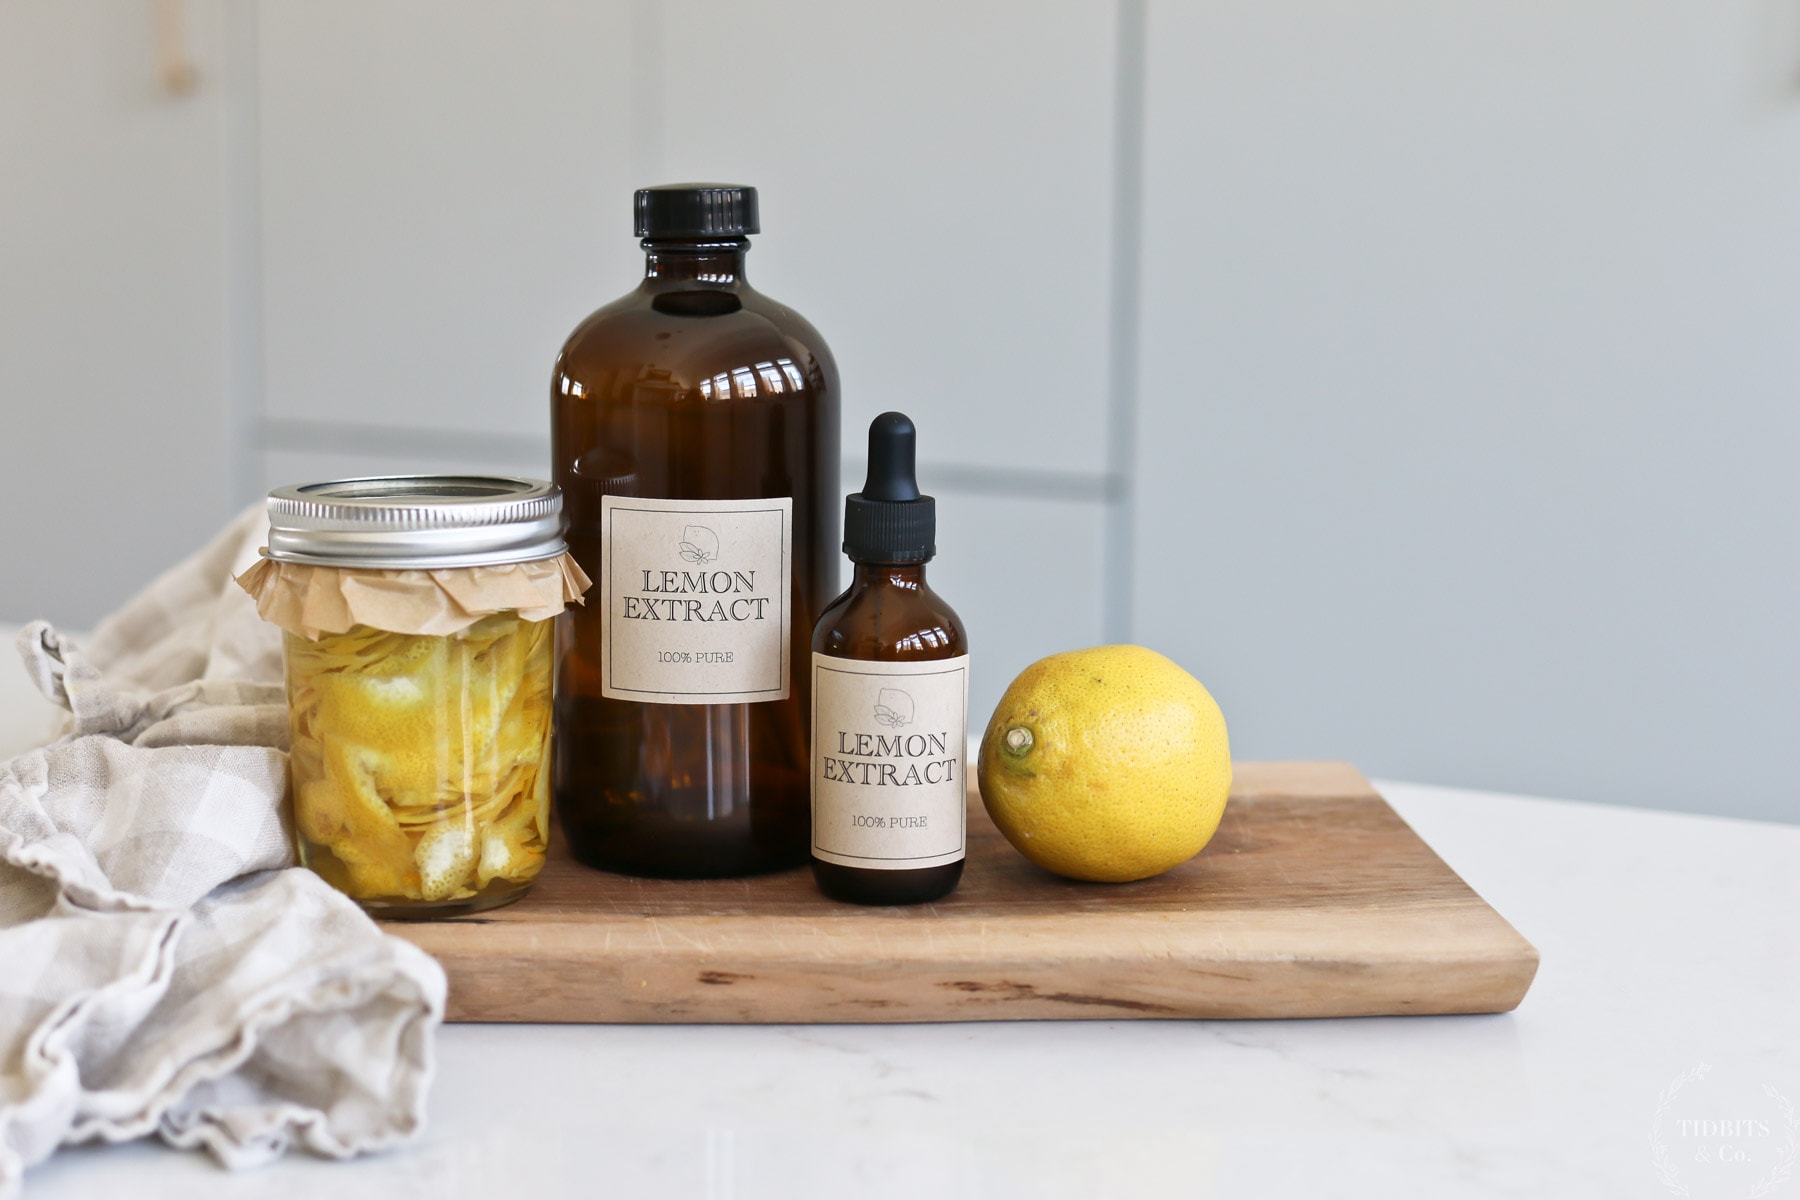 Homemade lemon extract in glass bottles and jars